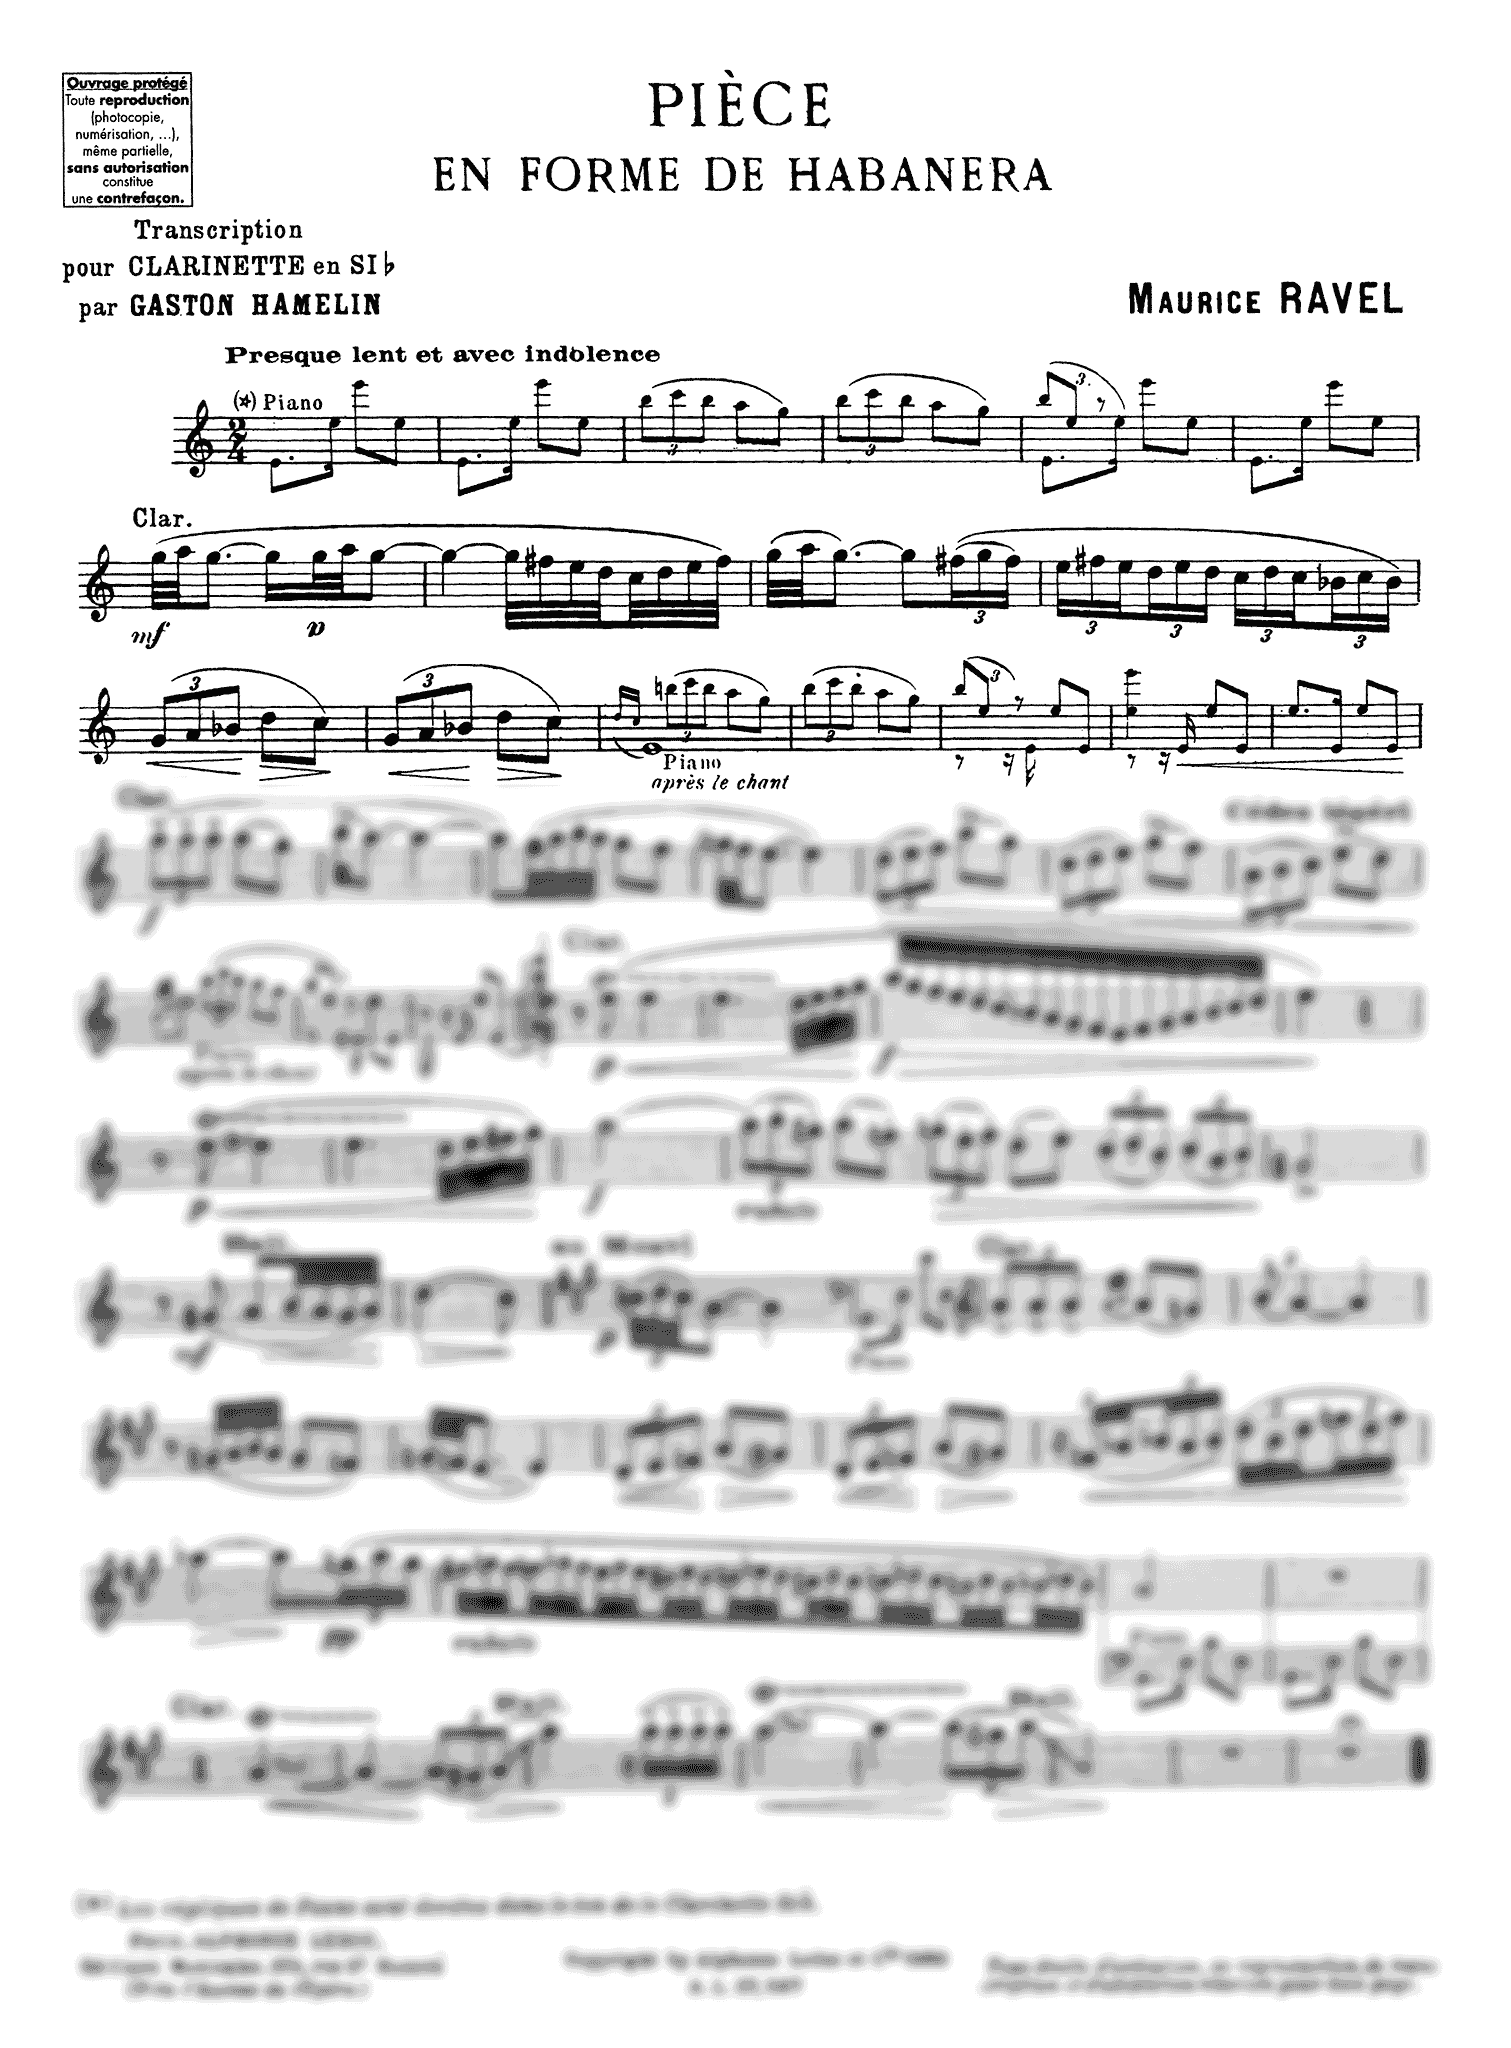 Ravel Pièce en forme de habanera clarinet part